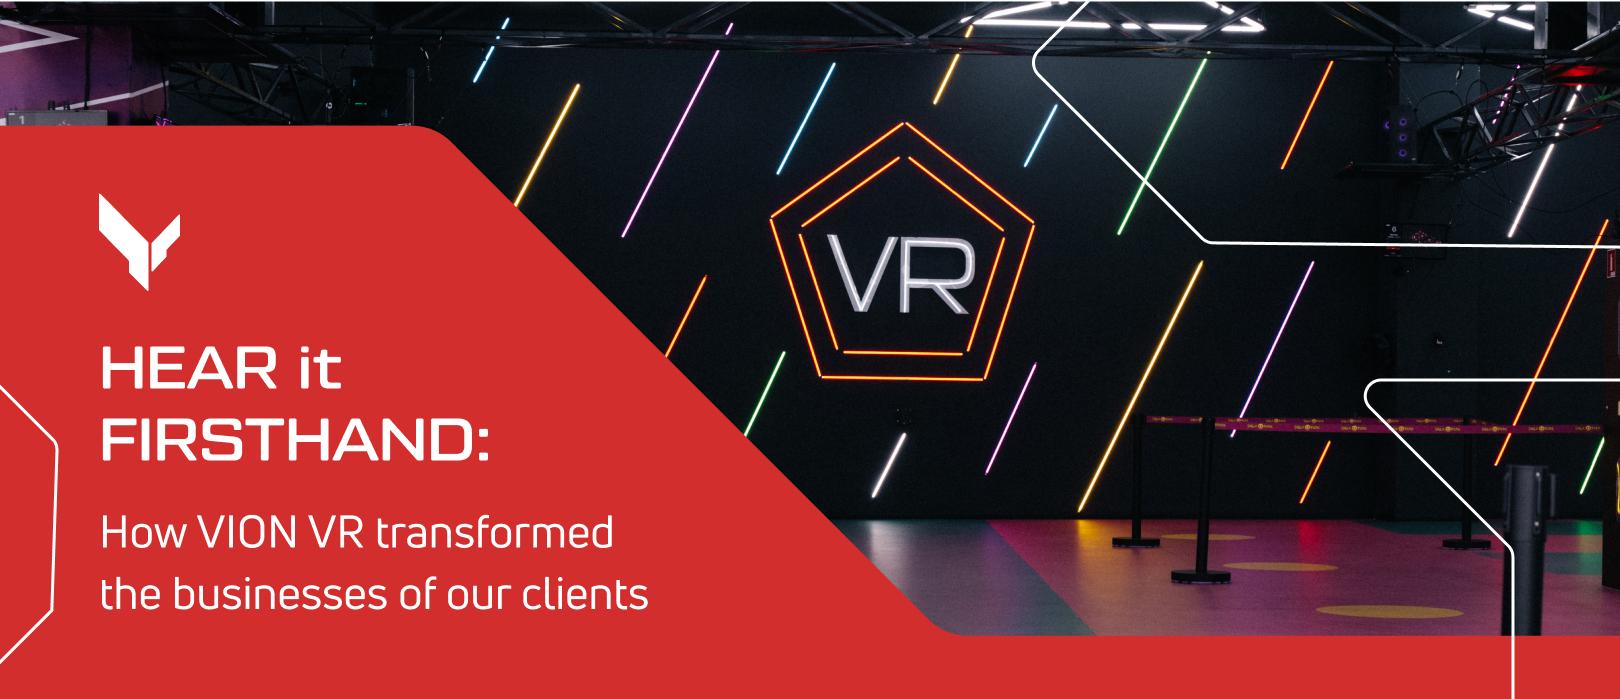 Vion VR аrenas Technology